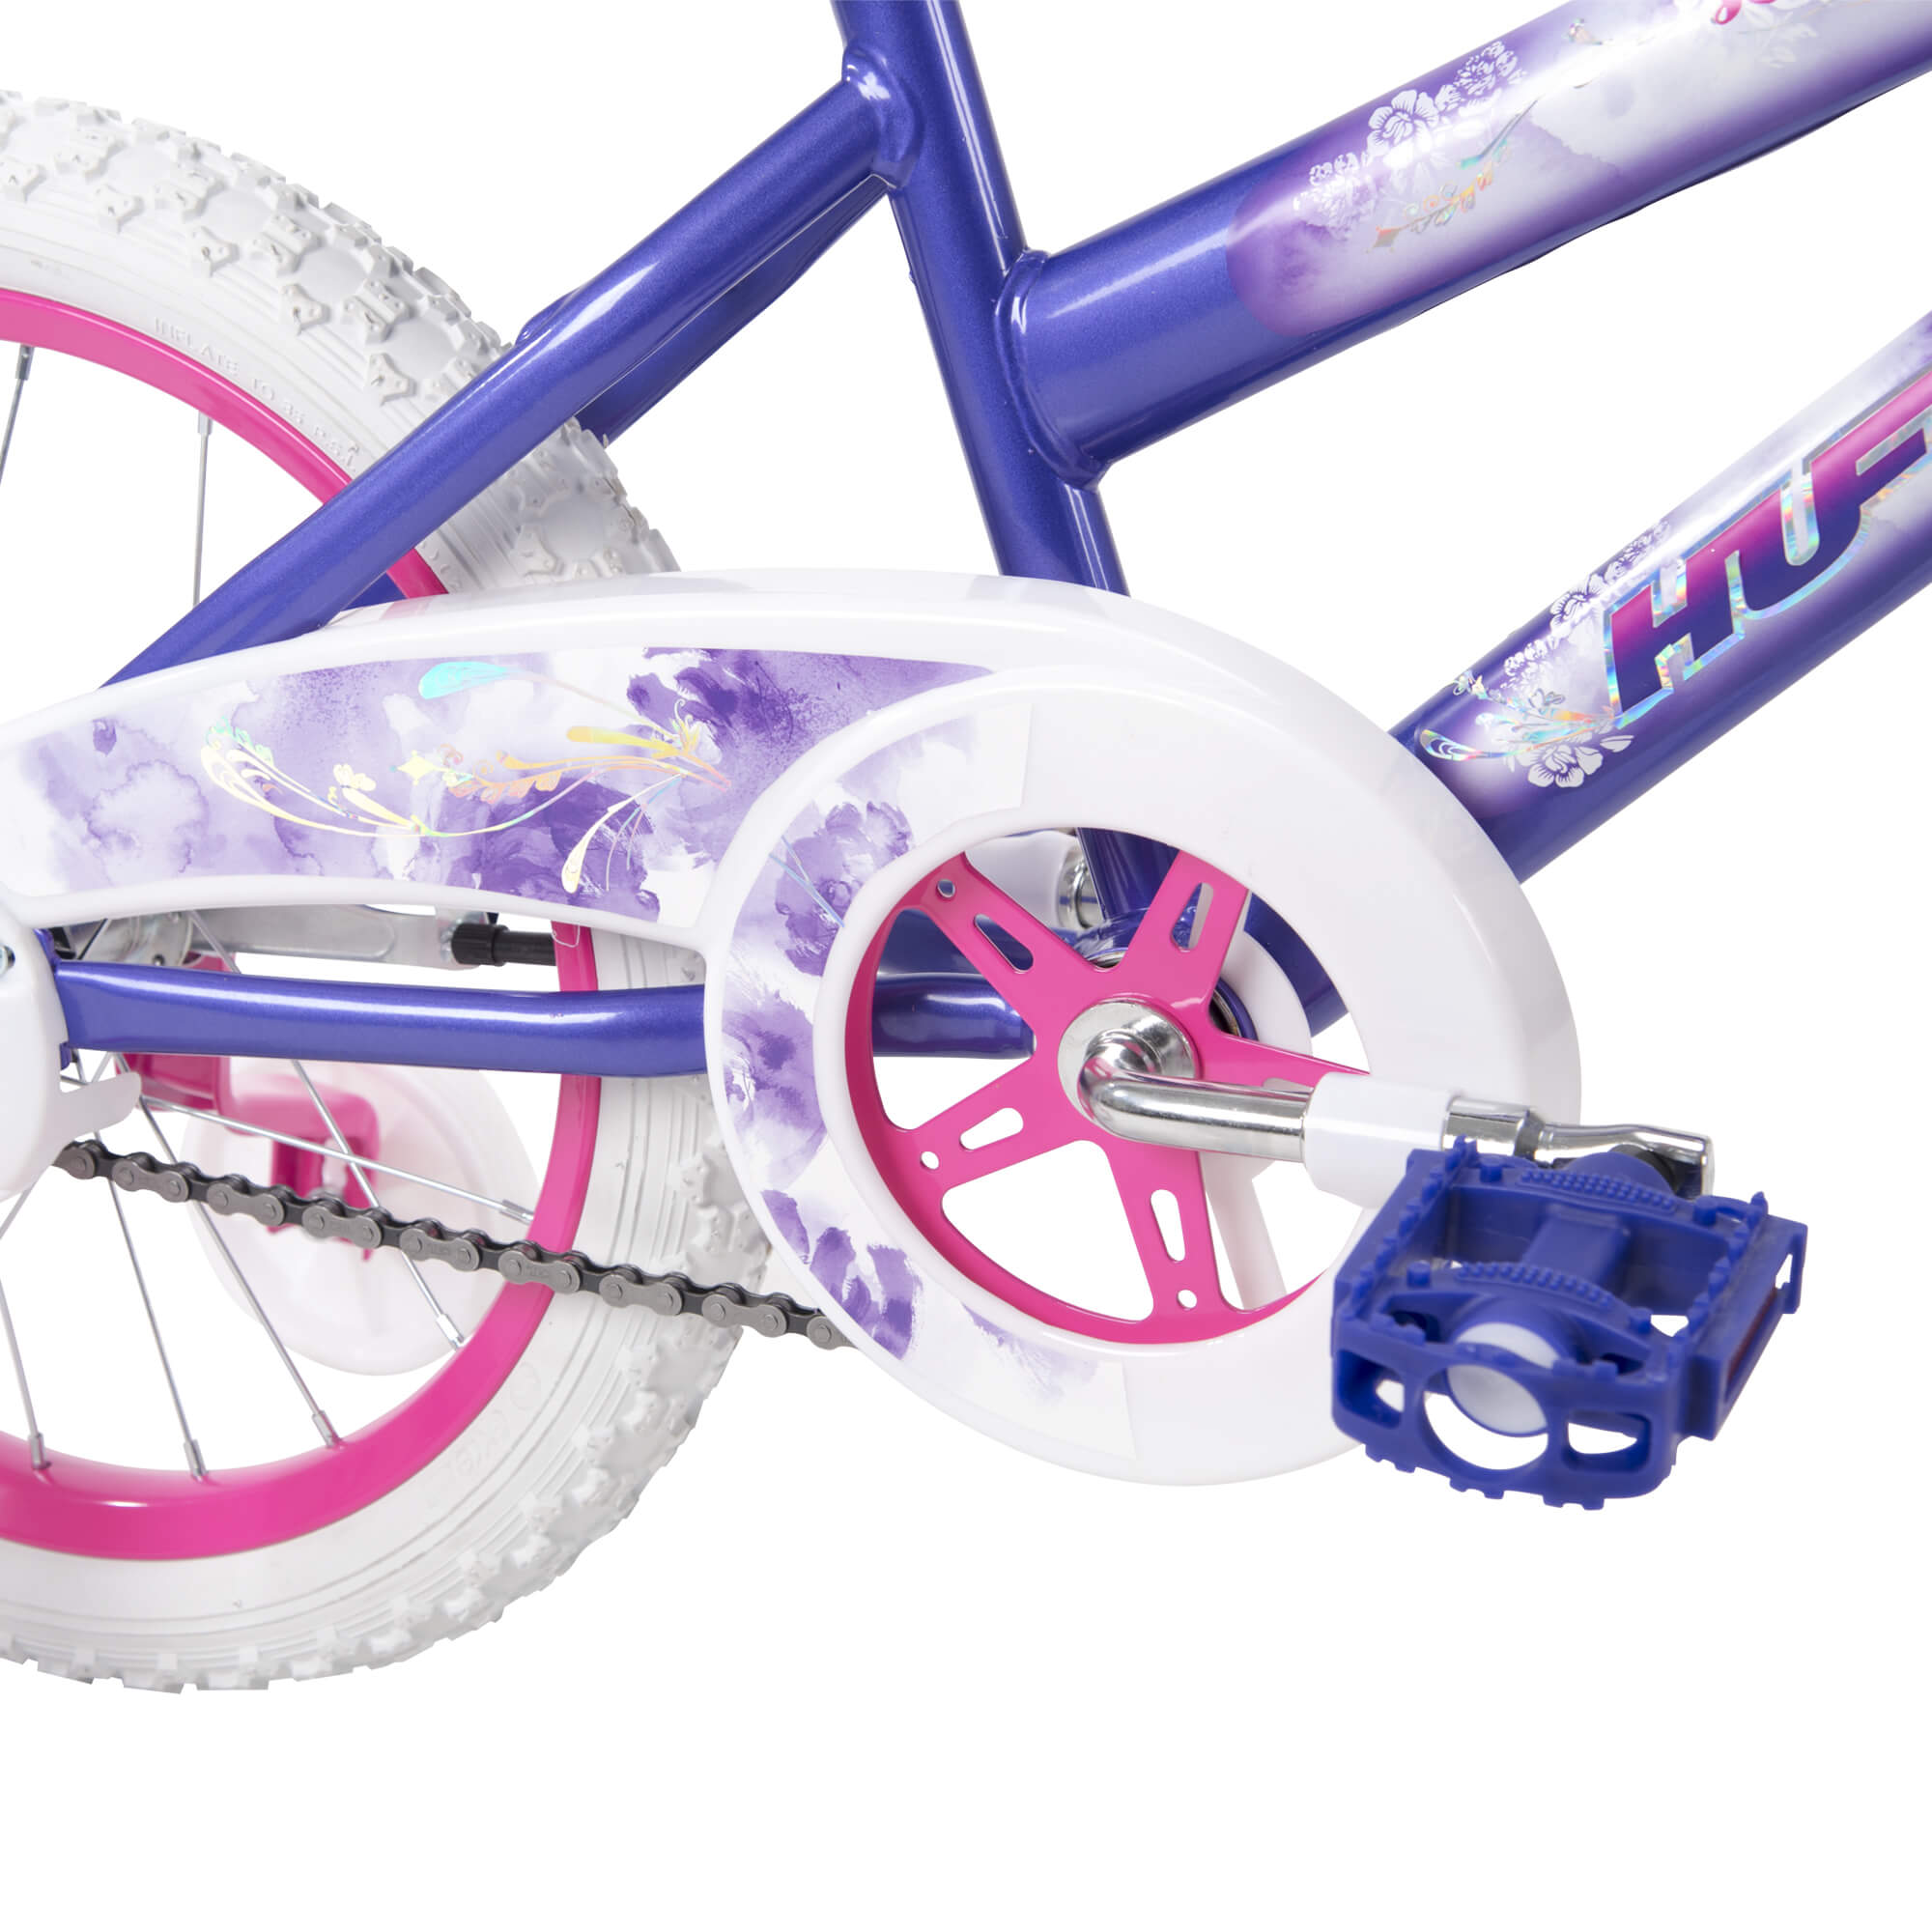 Huffy 16" Sea Star EZ Build Kids Bike for Girls', Purple - image 4 of 5